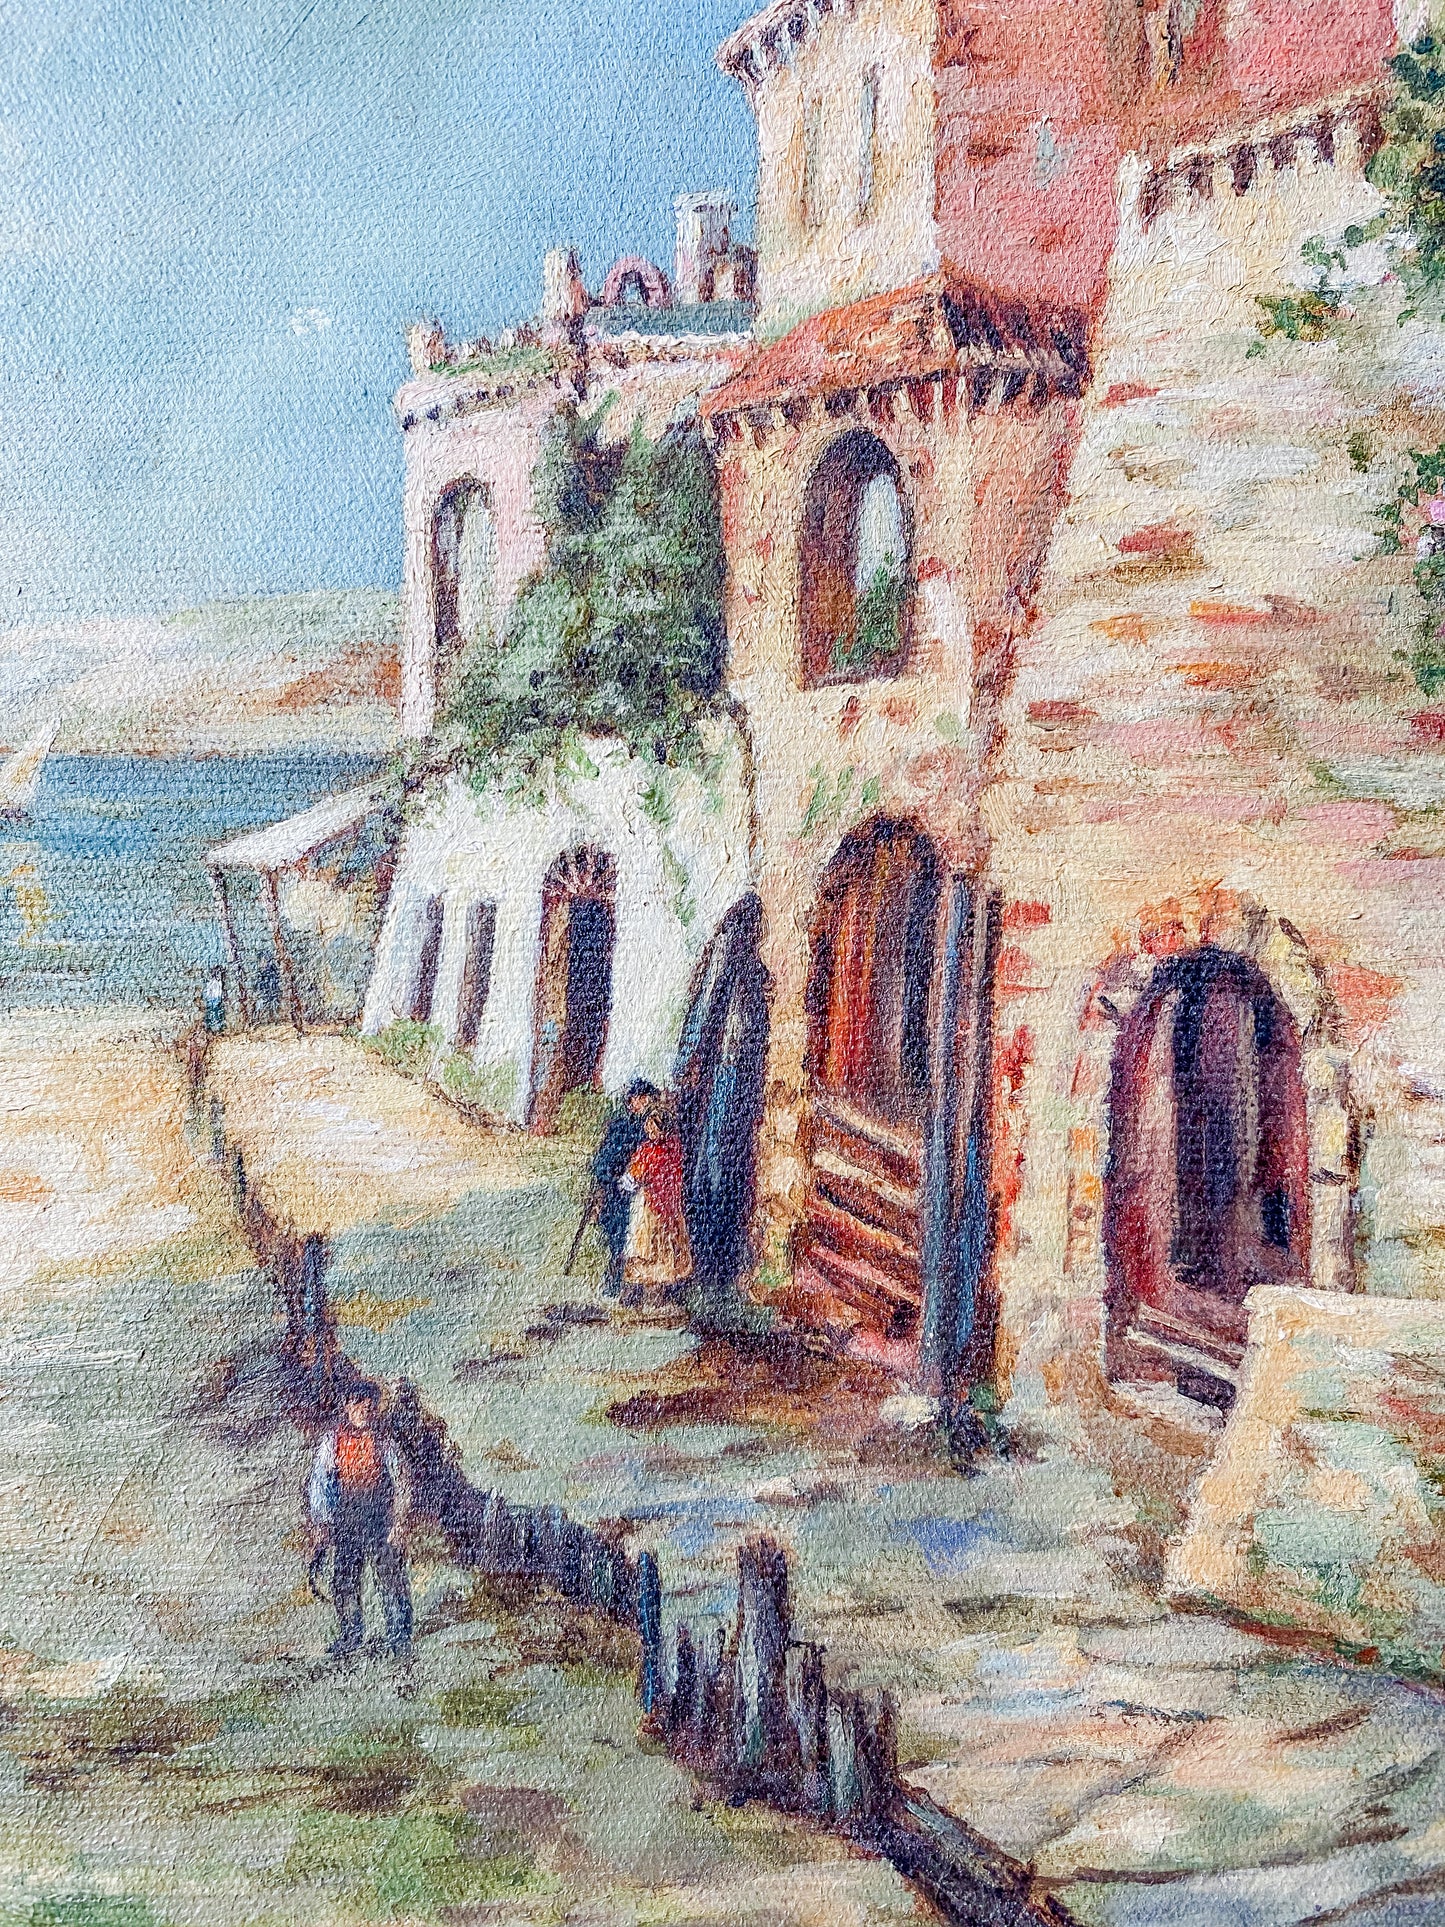 Vintage Original Oil Painting of European Wharf Scene, c1930